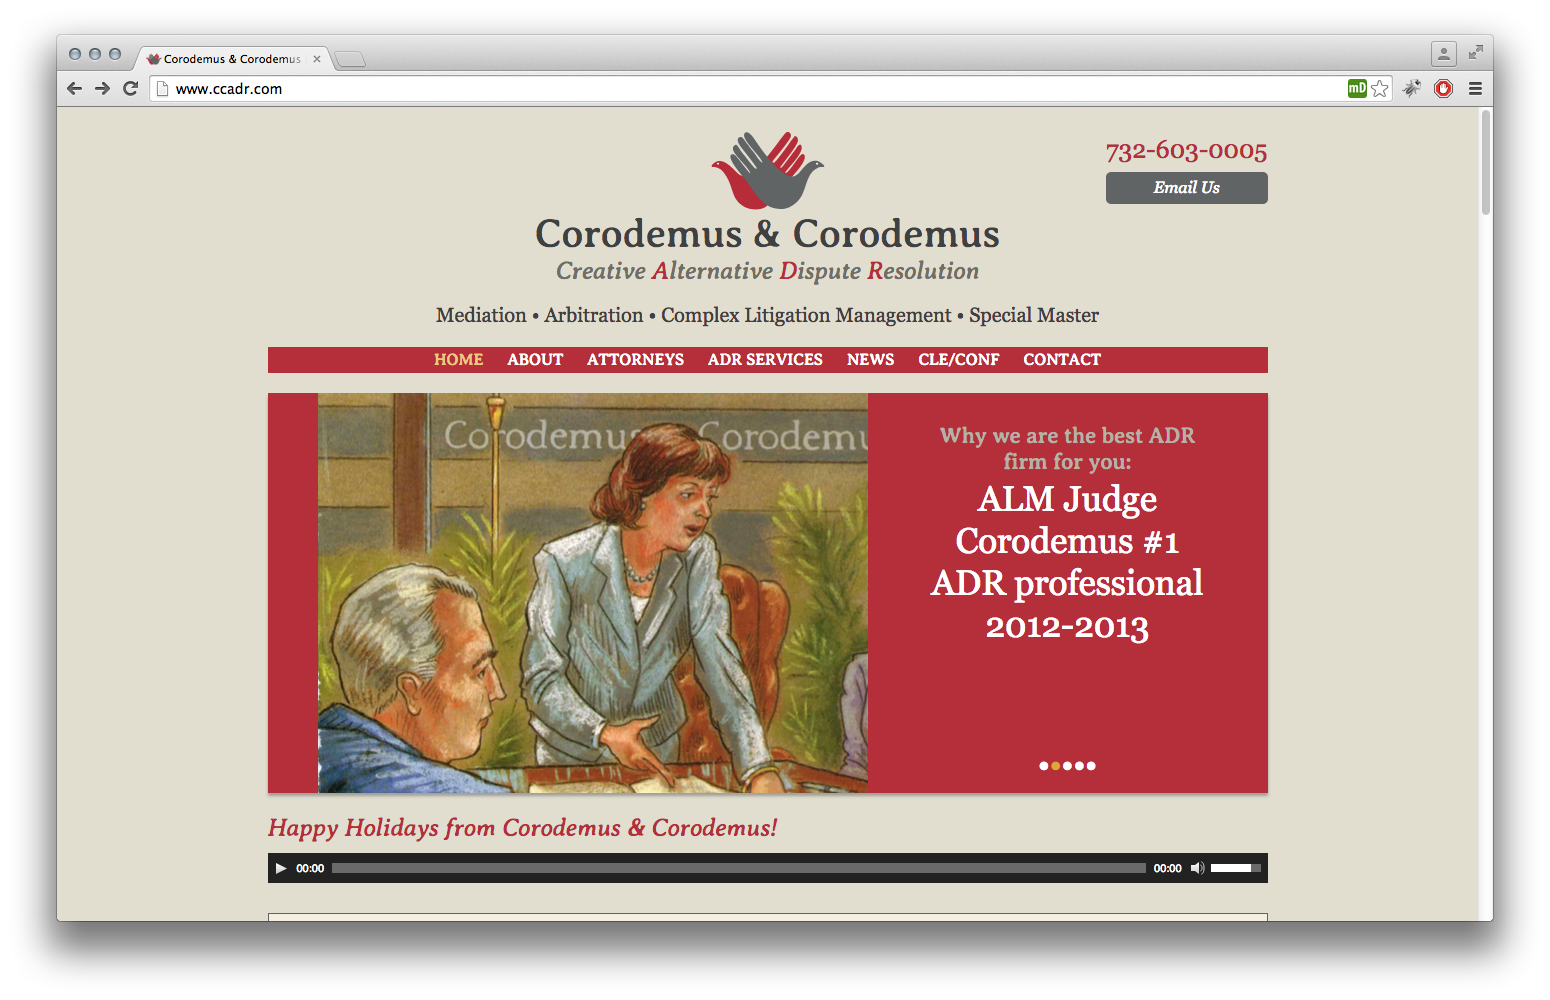 Corodemus & Corodemus ADR website